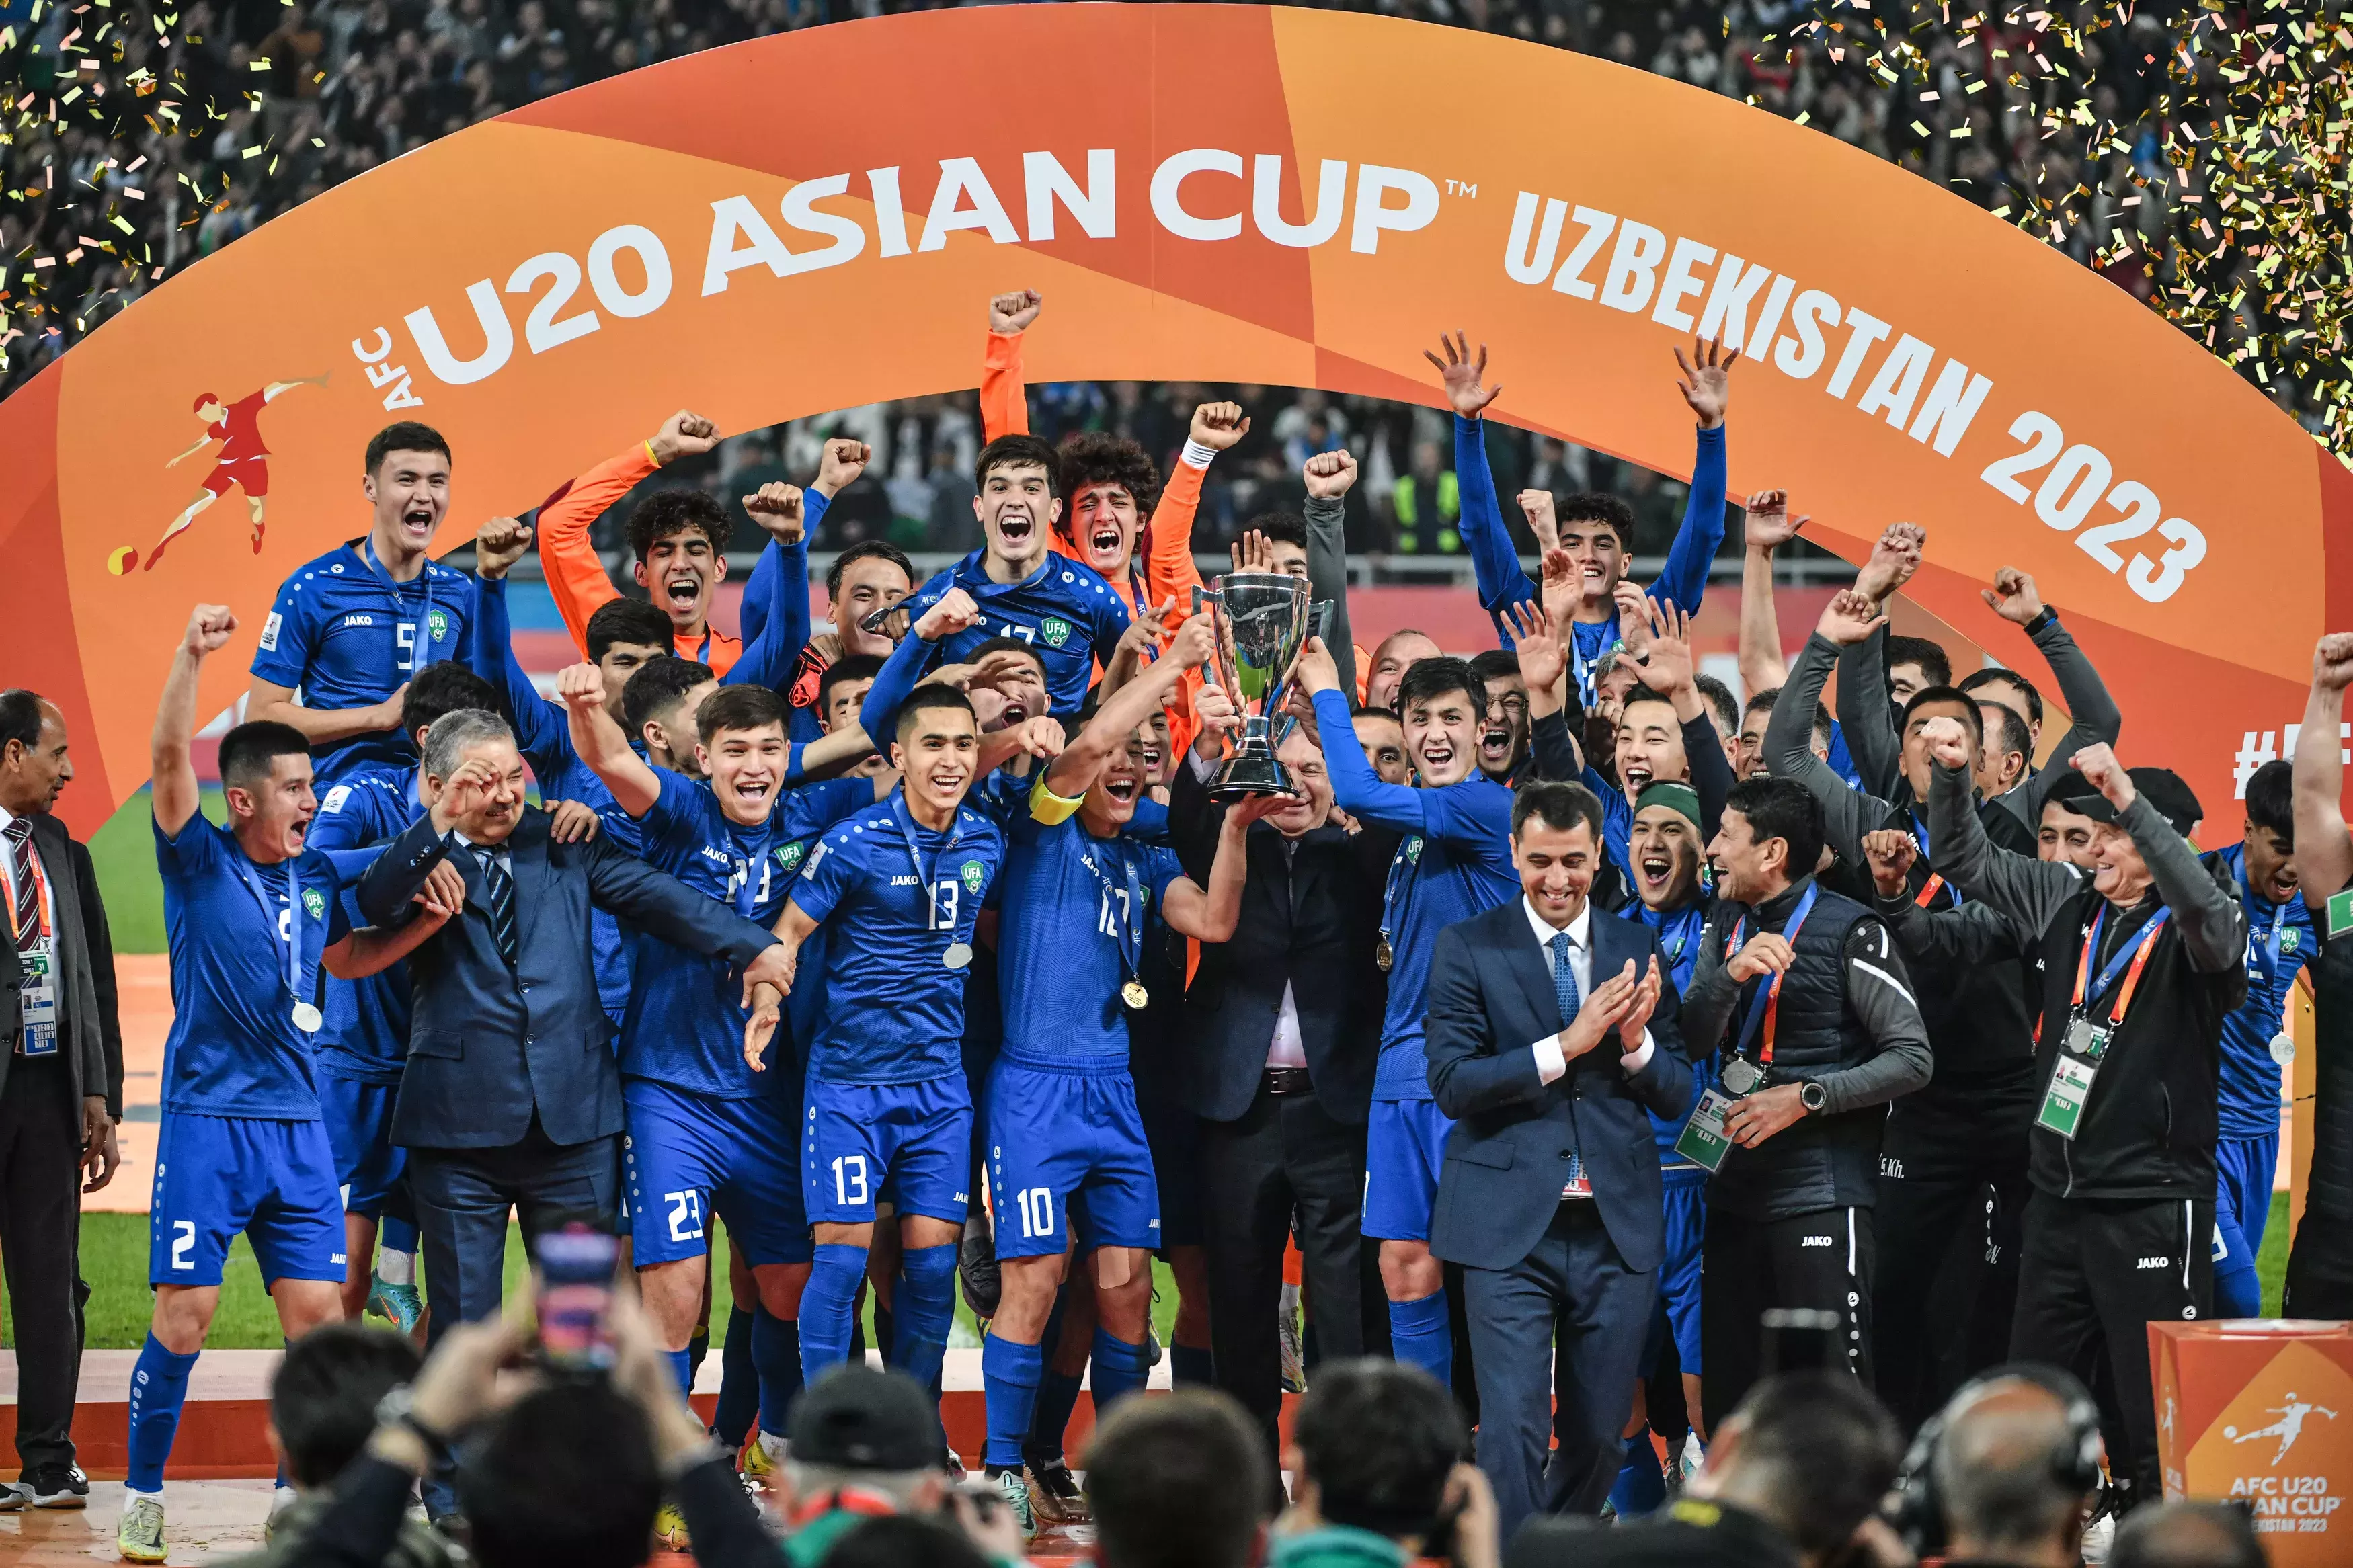 Uzbekistan U20 lifting the AFC Asian U20 Championship - Image via FIFA